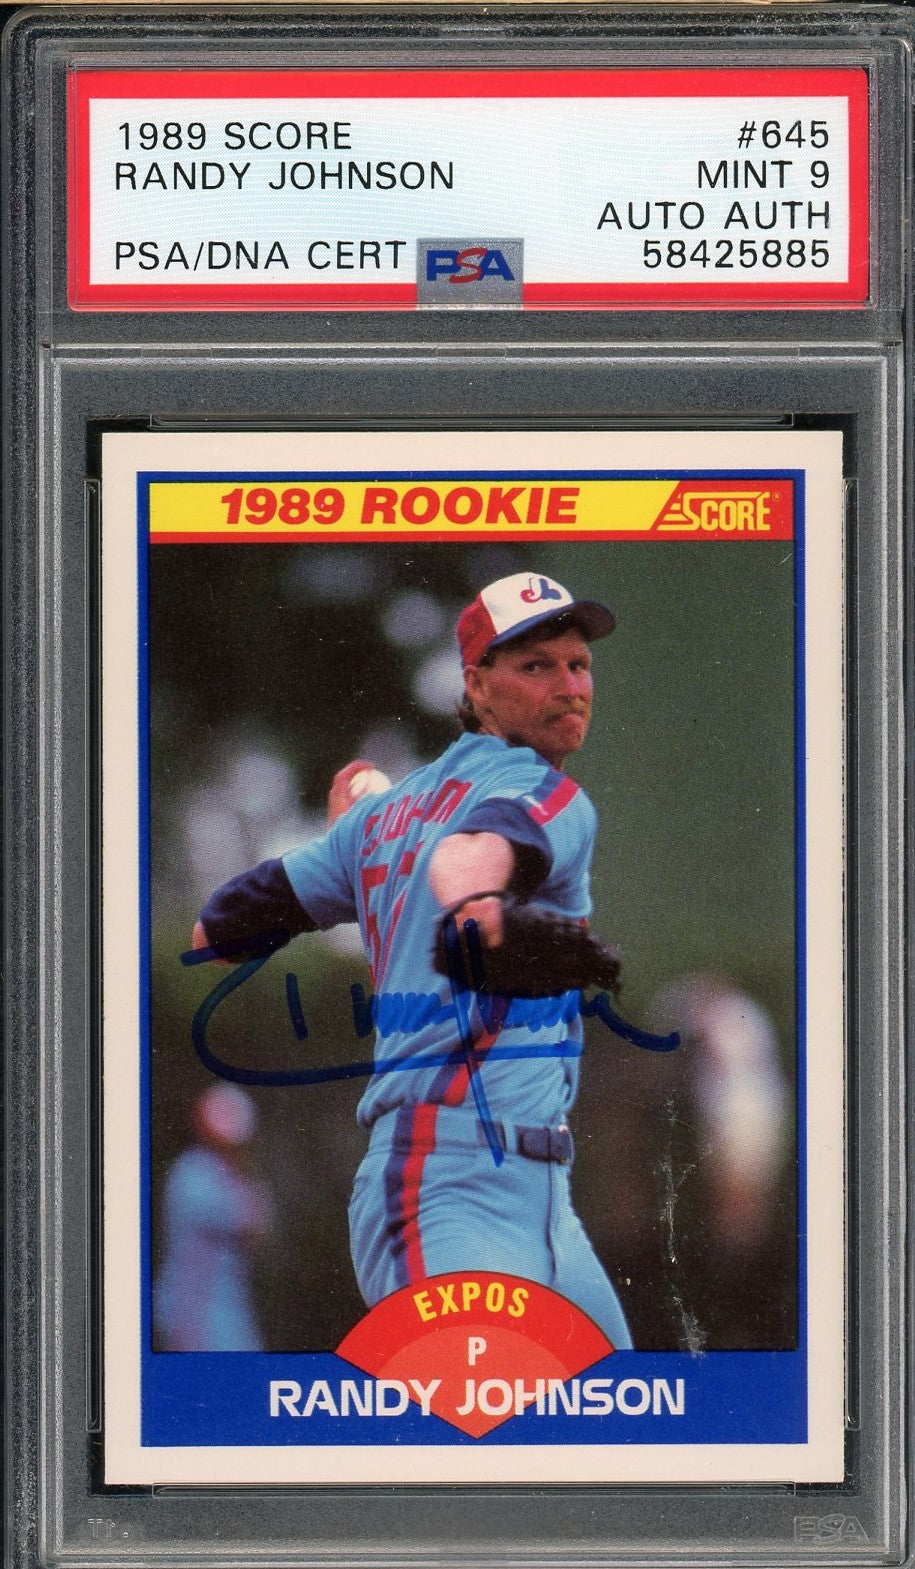 Randy Johnson 1989 Score Signed Rookie Card #645 Auto Graded PSA 9 58425885